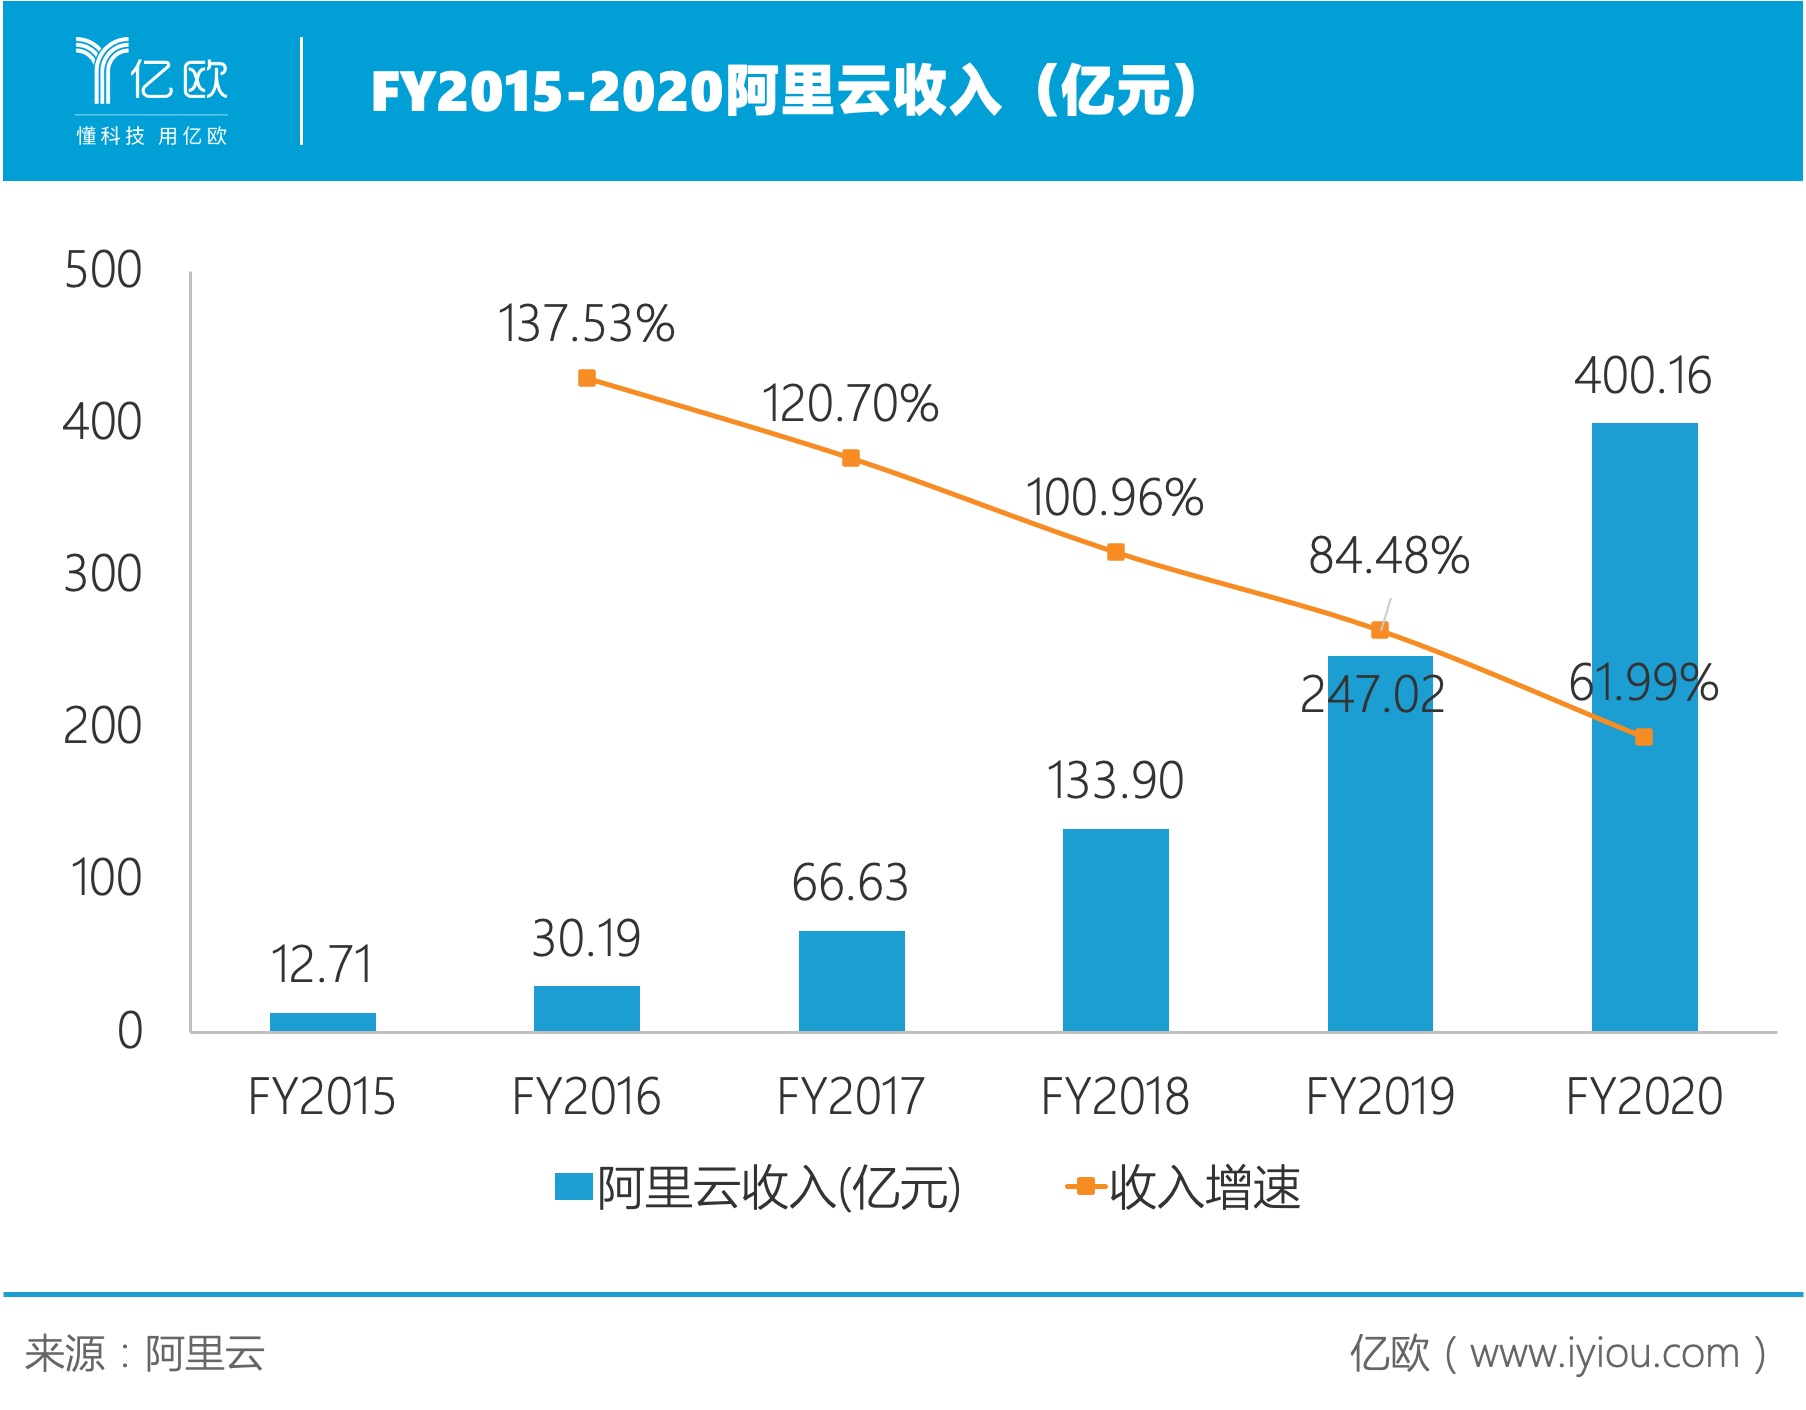 FY2015-2020阿里云收入（亿元）.jpg.jpg